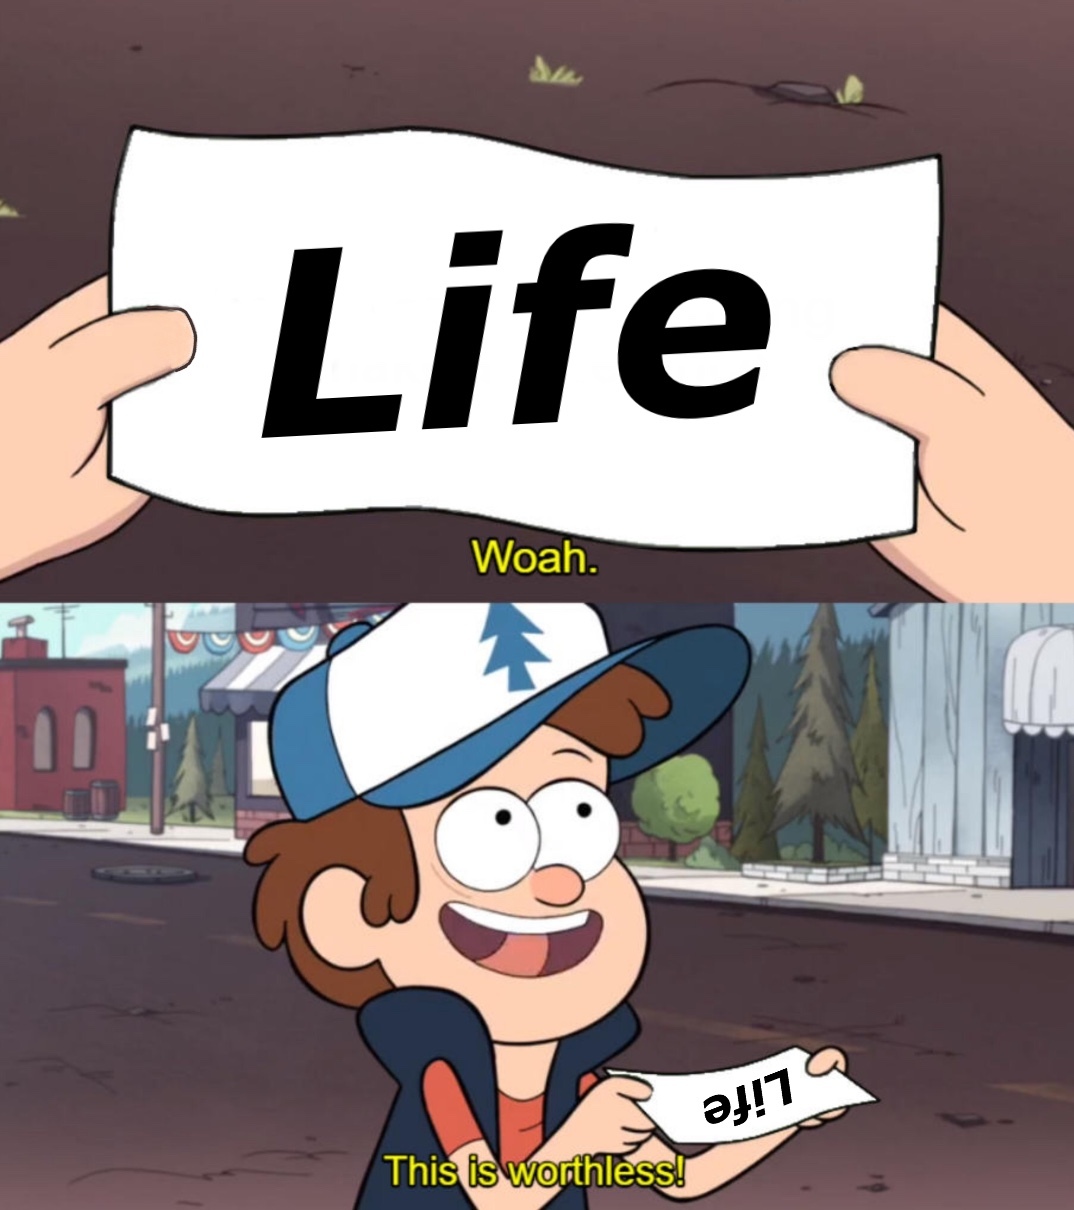 Life is worthless - meme.